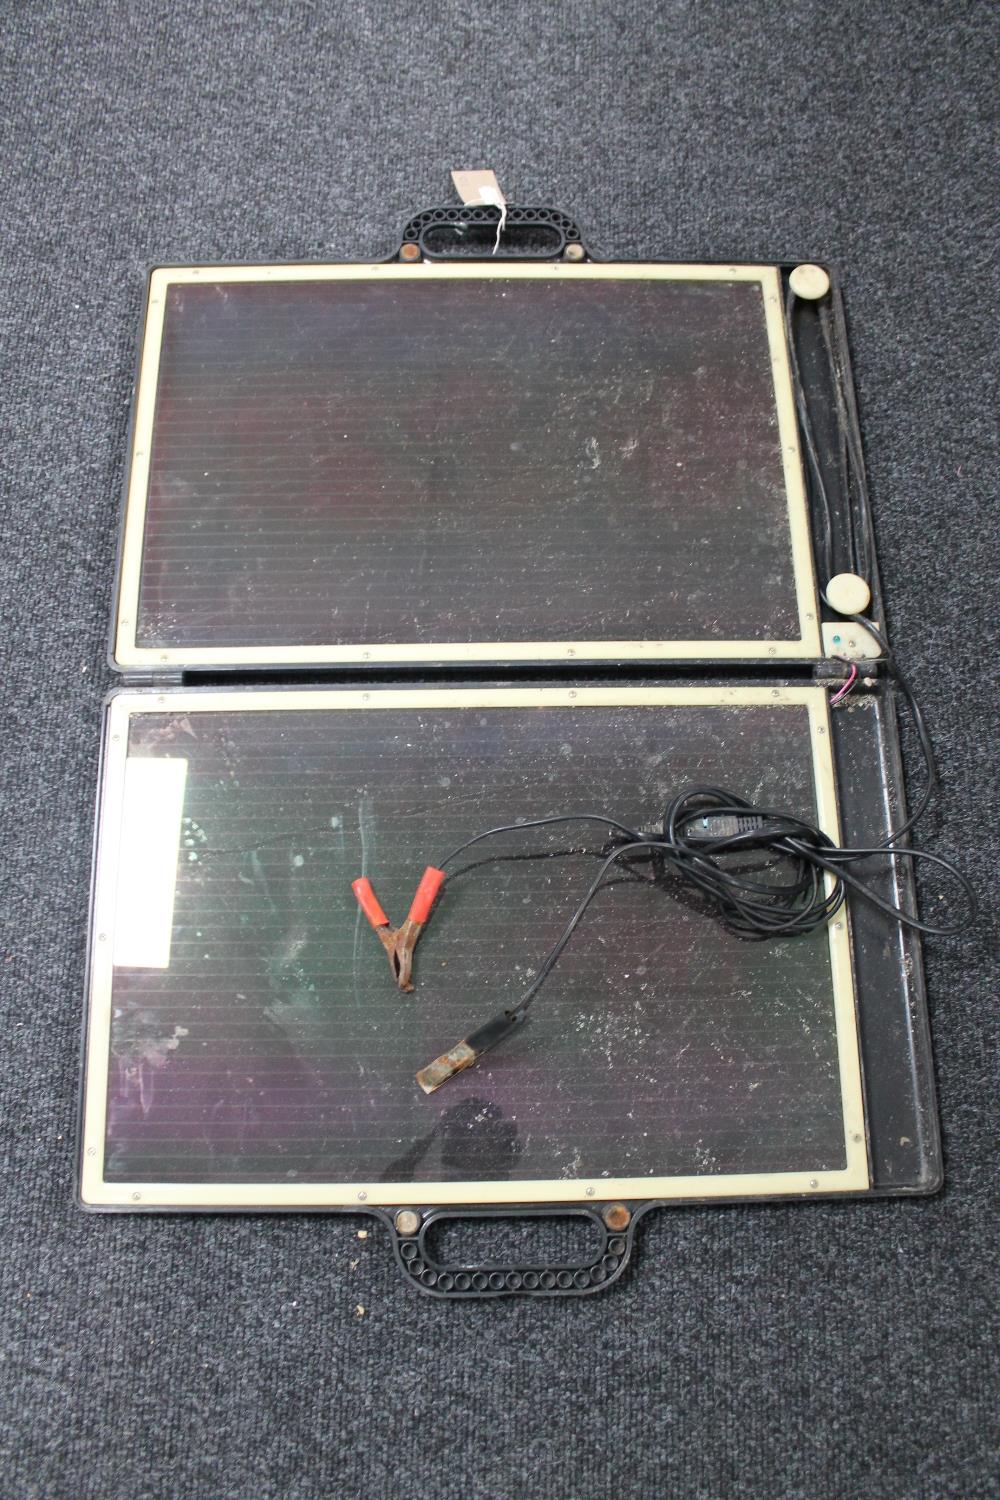 A portable cased solar panel kit